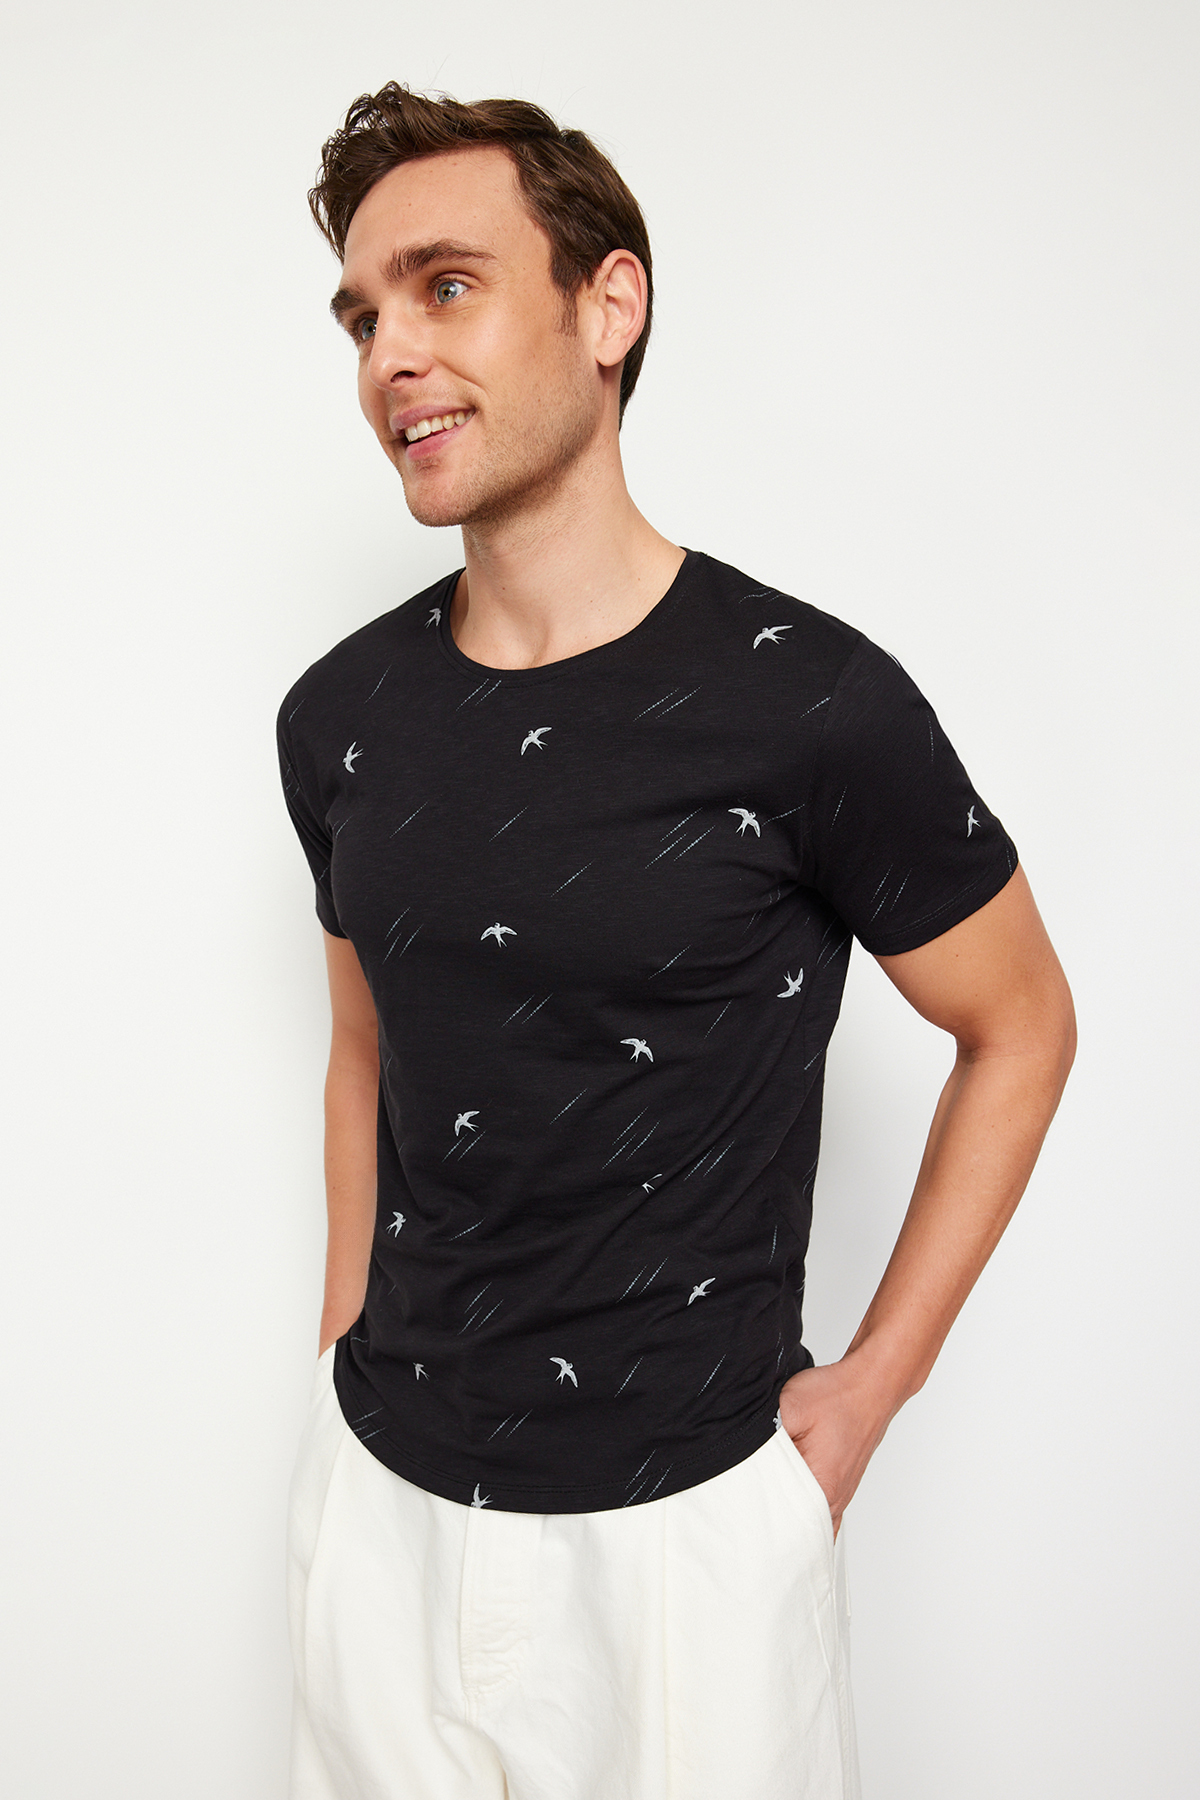 Trendyol Black Regular/Regular Cut Patterned T-Shirt